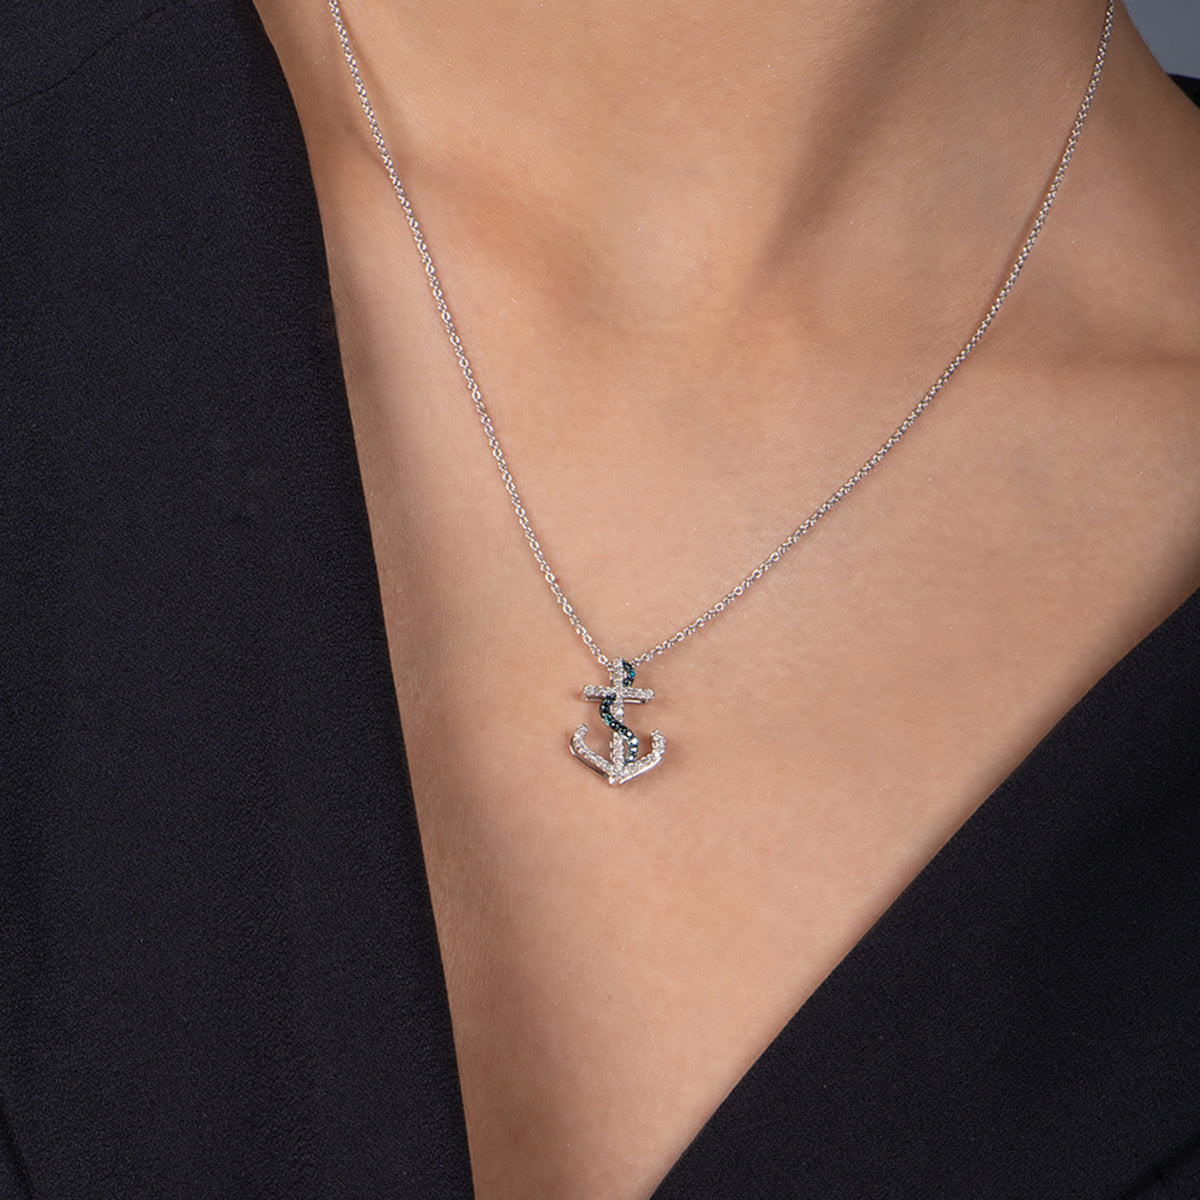 Jewelili Diamond Pendant Necklace in Sterling Silver Jewelry